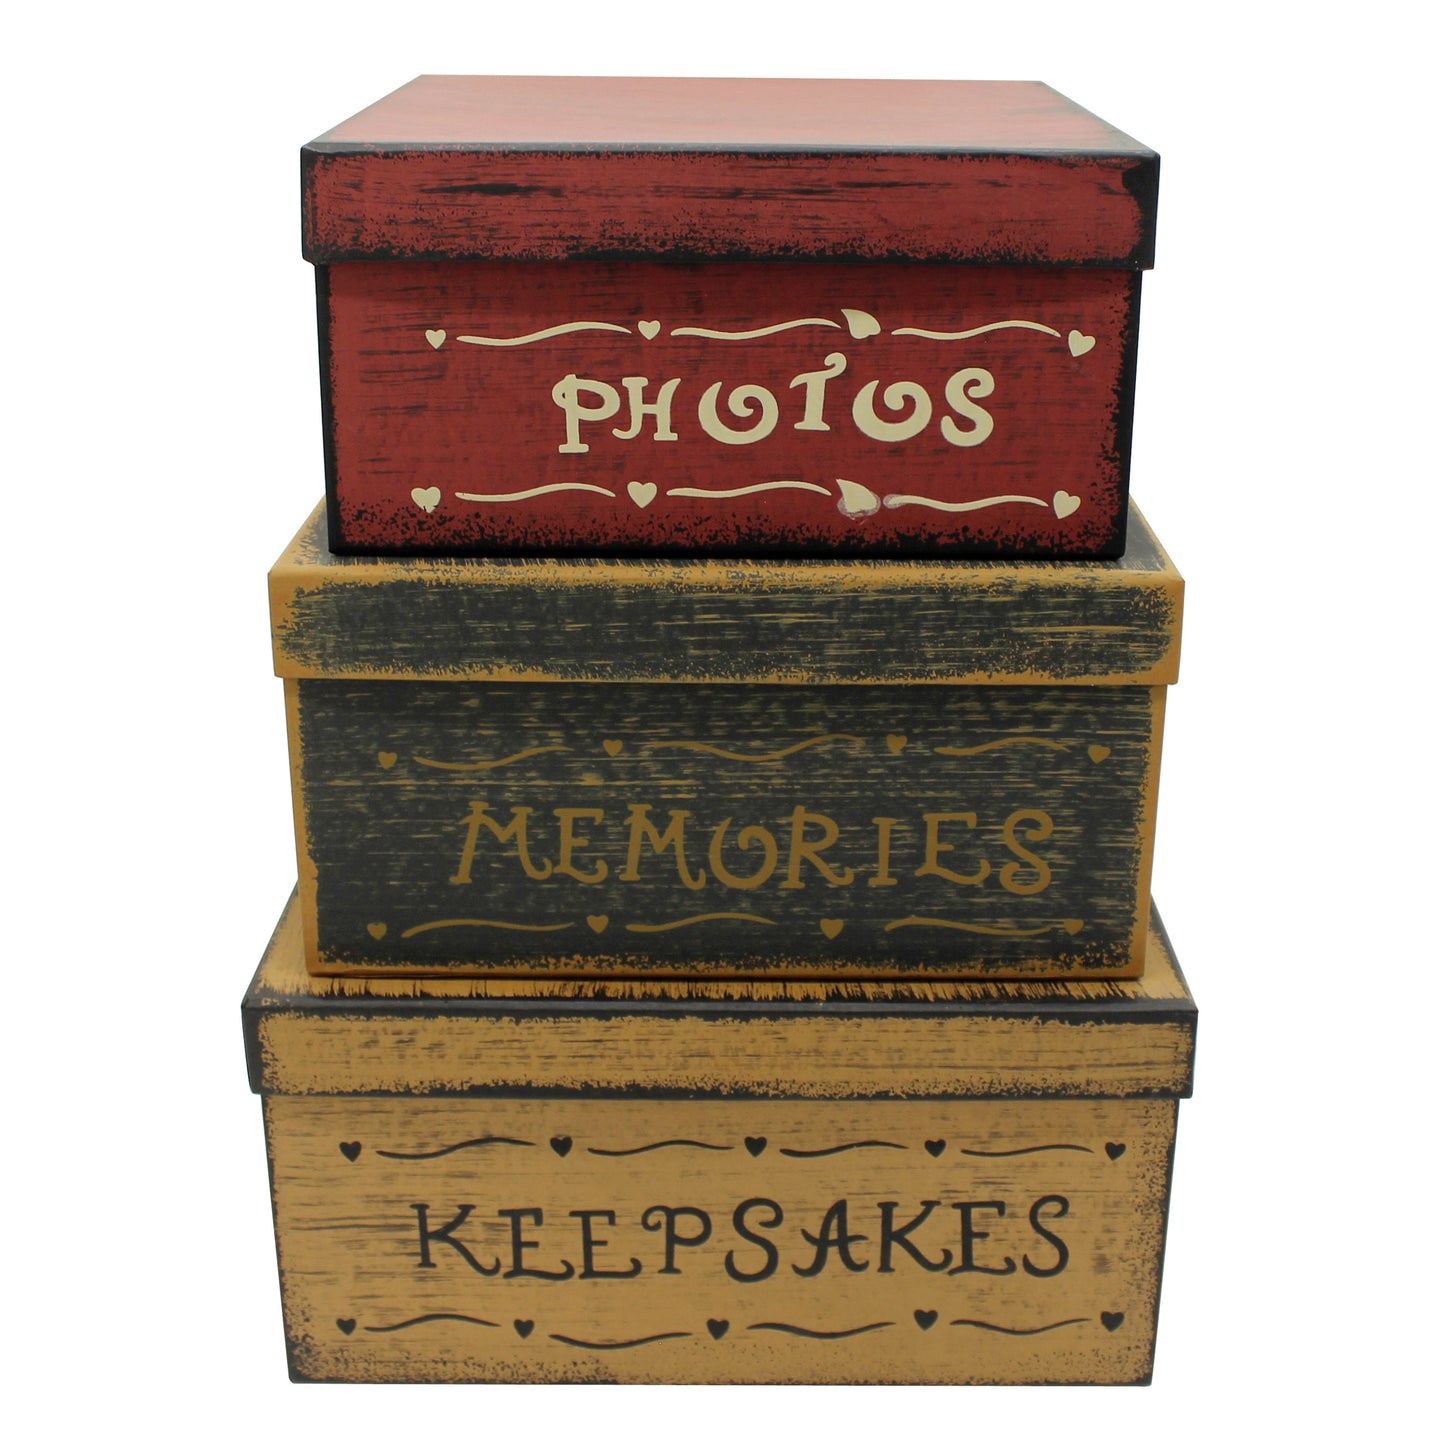 CVHOMEDECO. Primitive Vintage Square Photos, Memories, Keepsakes Cardboard Nesting Boxes, Large 11 X 11 X 5.5 Inch. Set of 3.